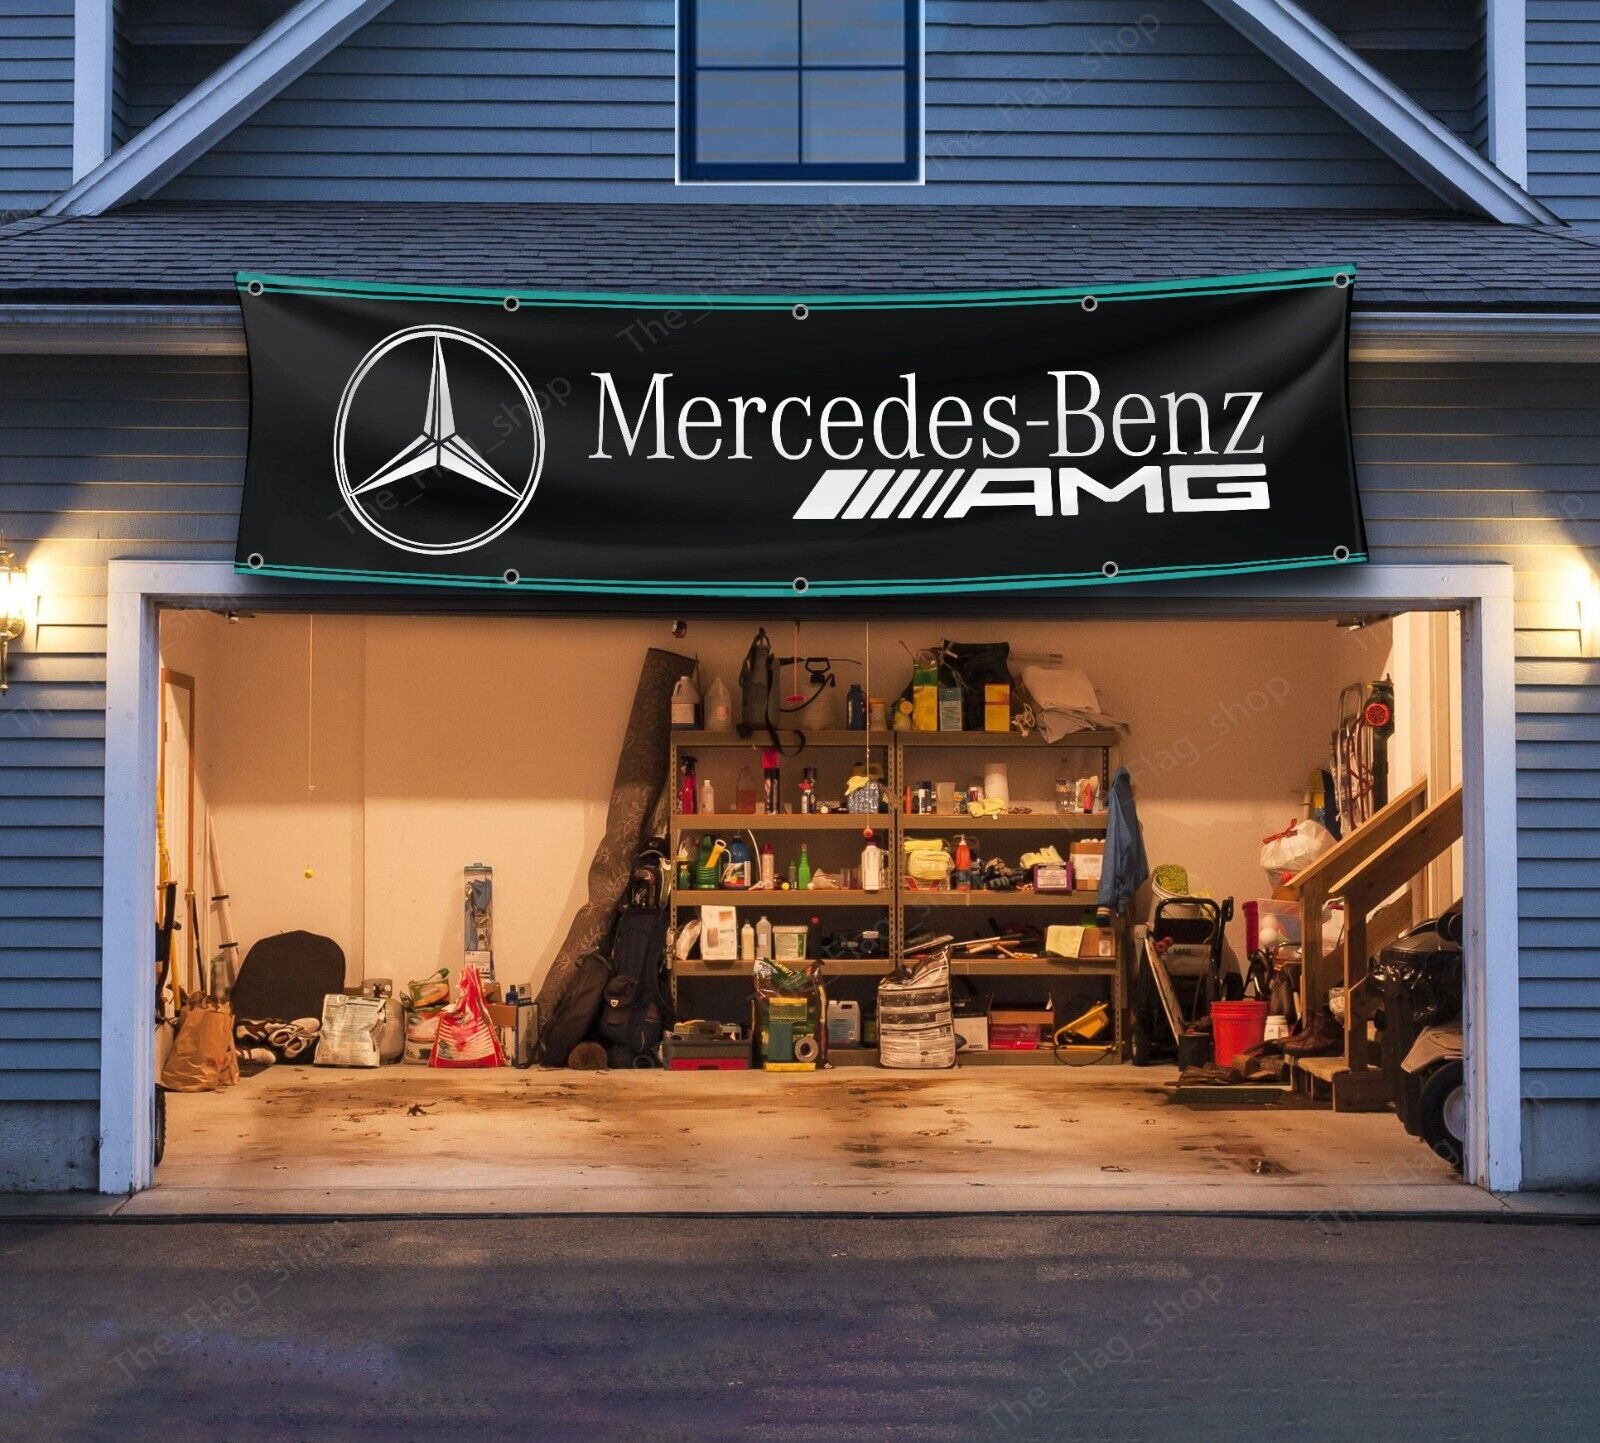 Mercedes Benz AMG 2x8FT Banner Racing Flag Car Show Garage Man Cave Wall Decor